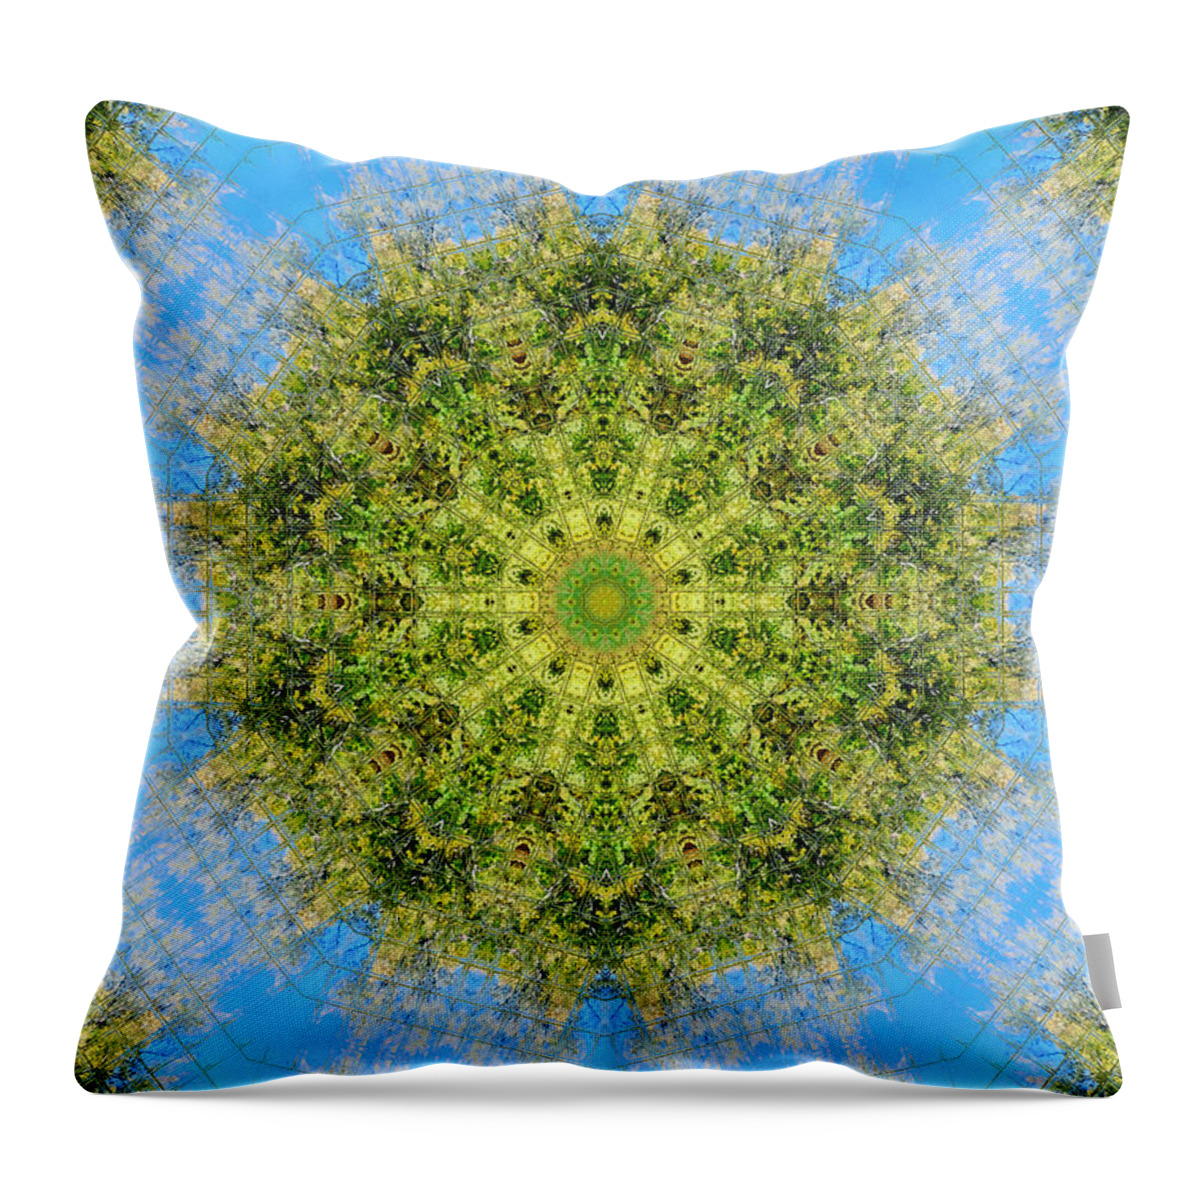 Flower Mandala Throw Pillow featuring the painting Flower mandala 35 by Jeelan Clark